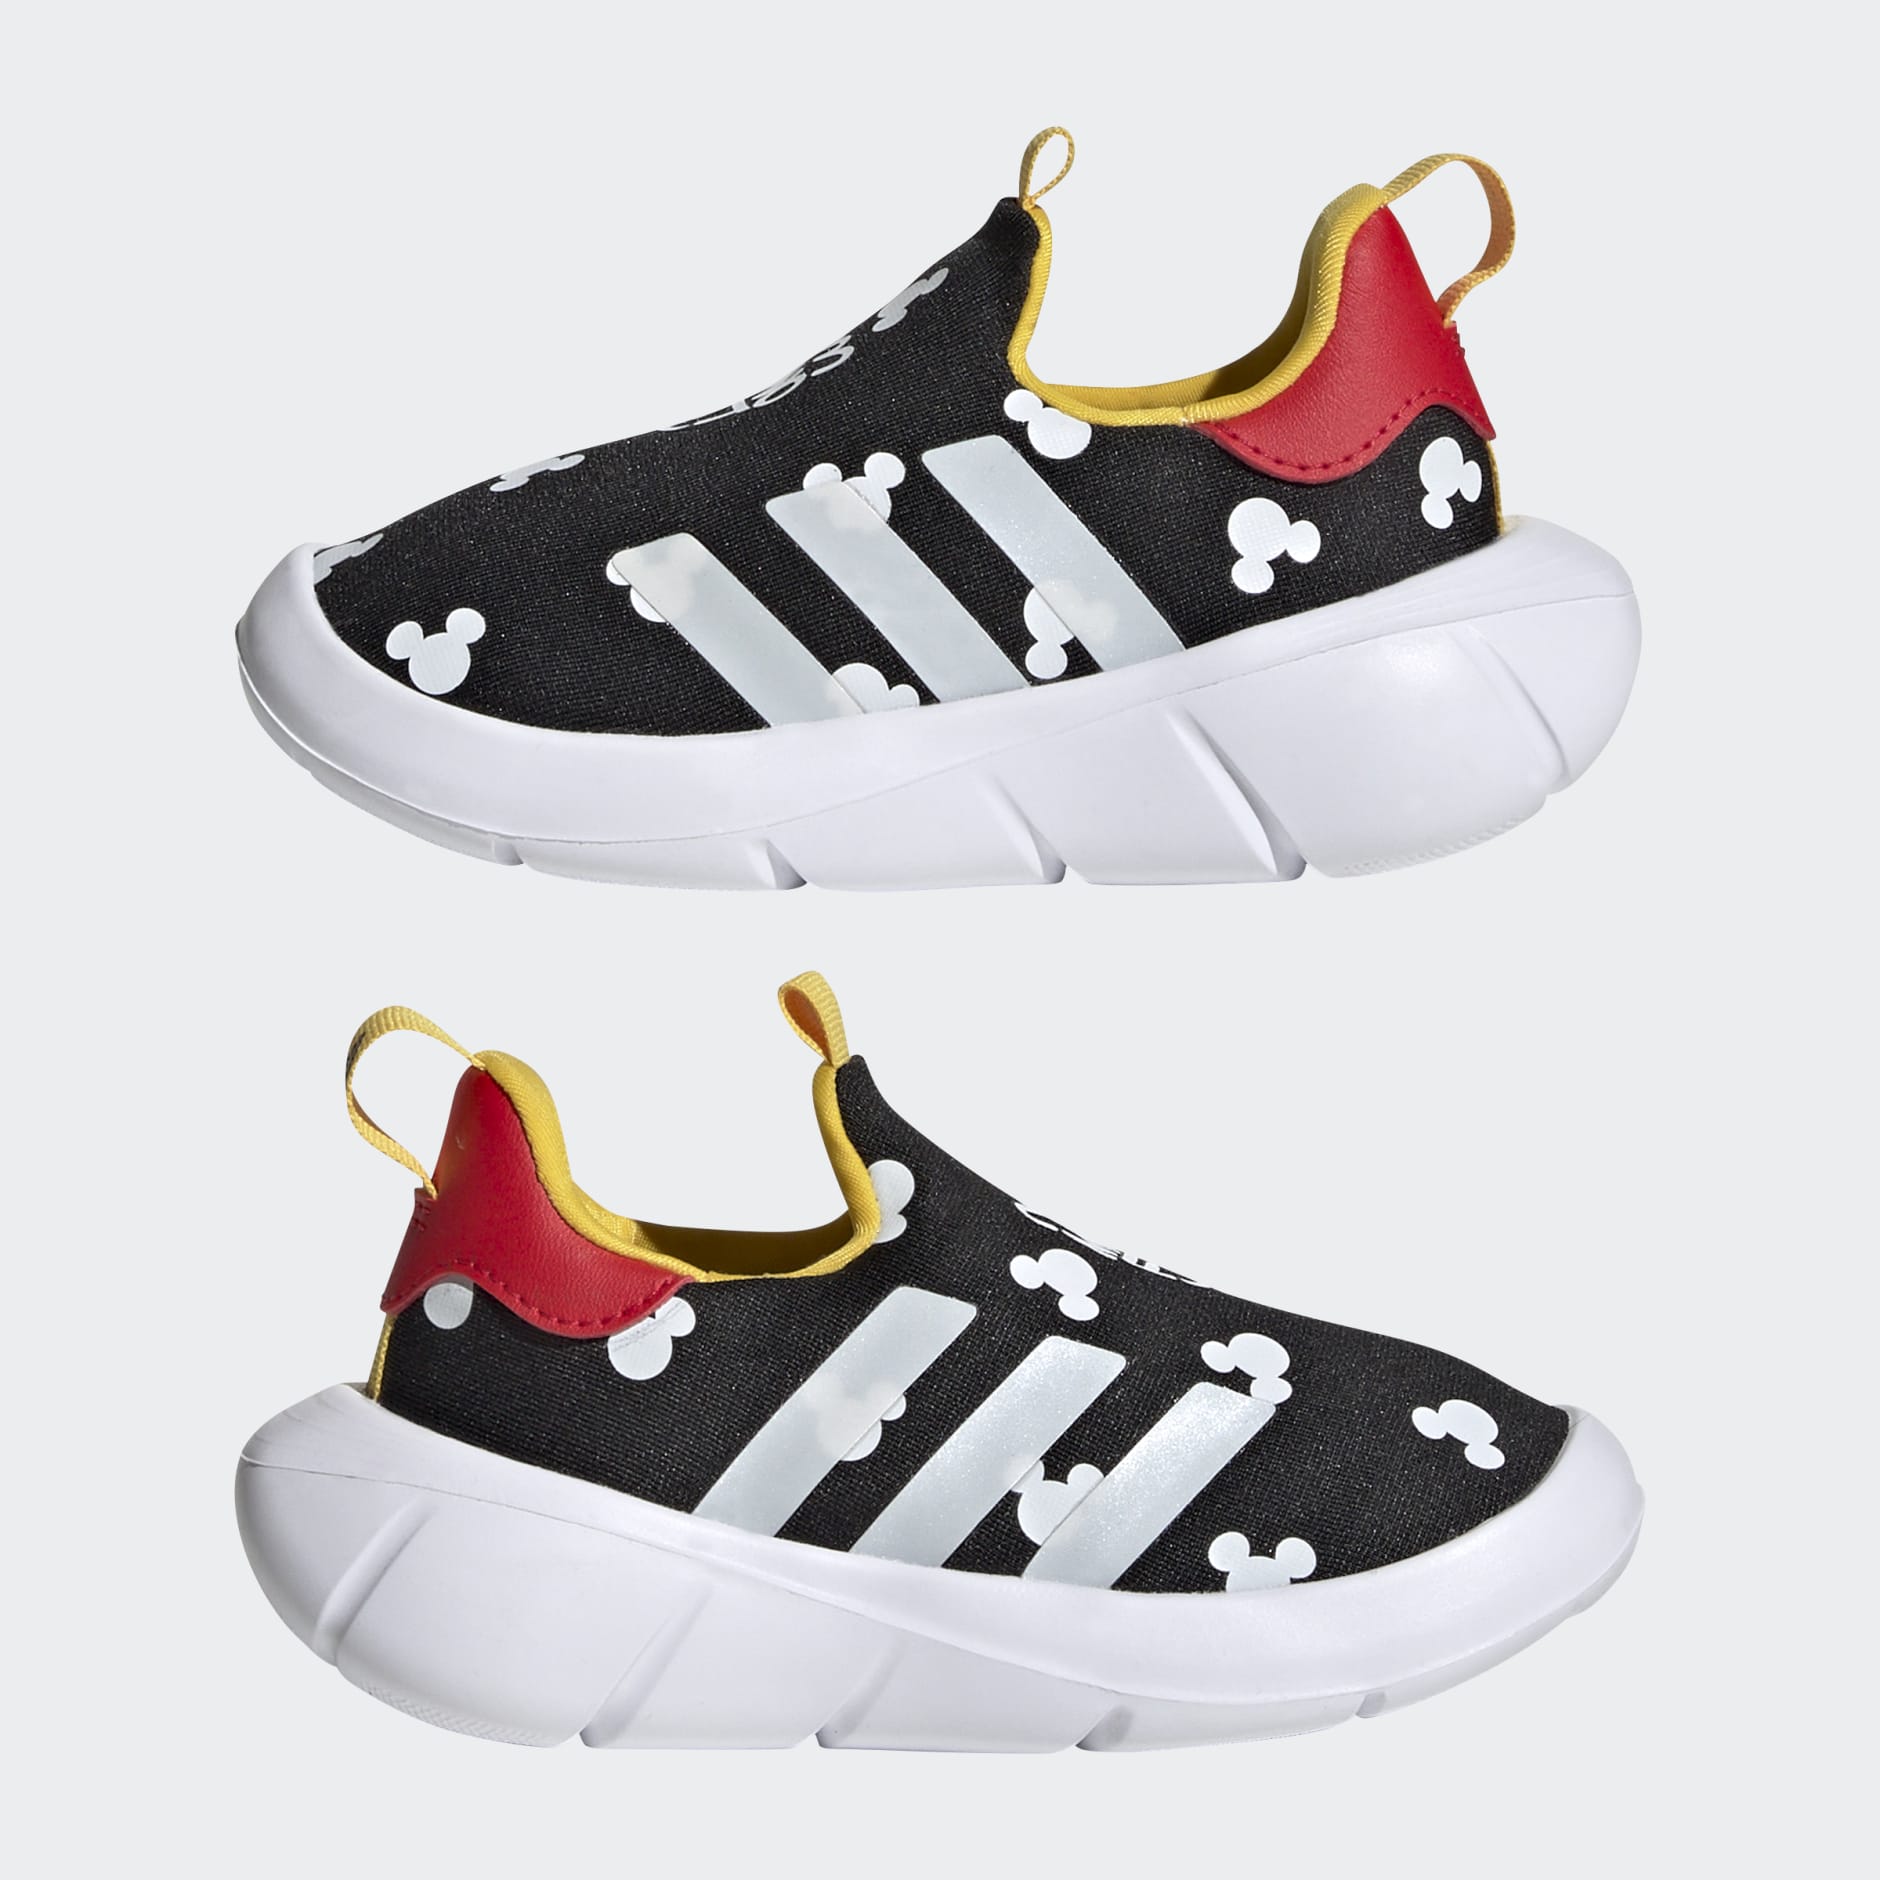 Lifestyle - Oman adidas MONOFIT | Shoes x Slip-On Kids Black Shoes Disney - Trainer